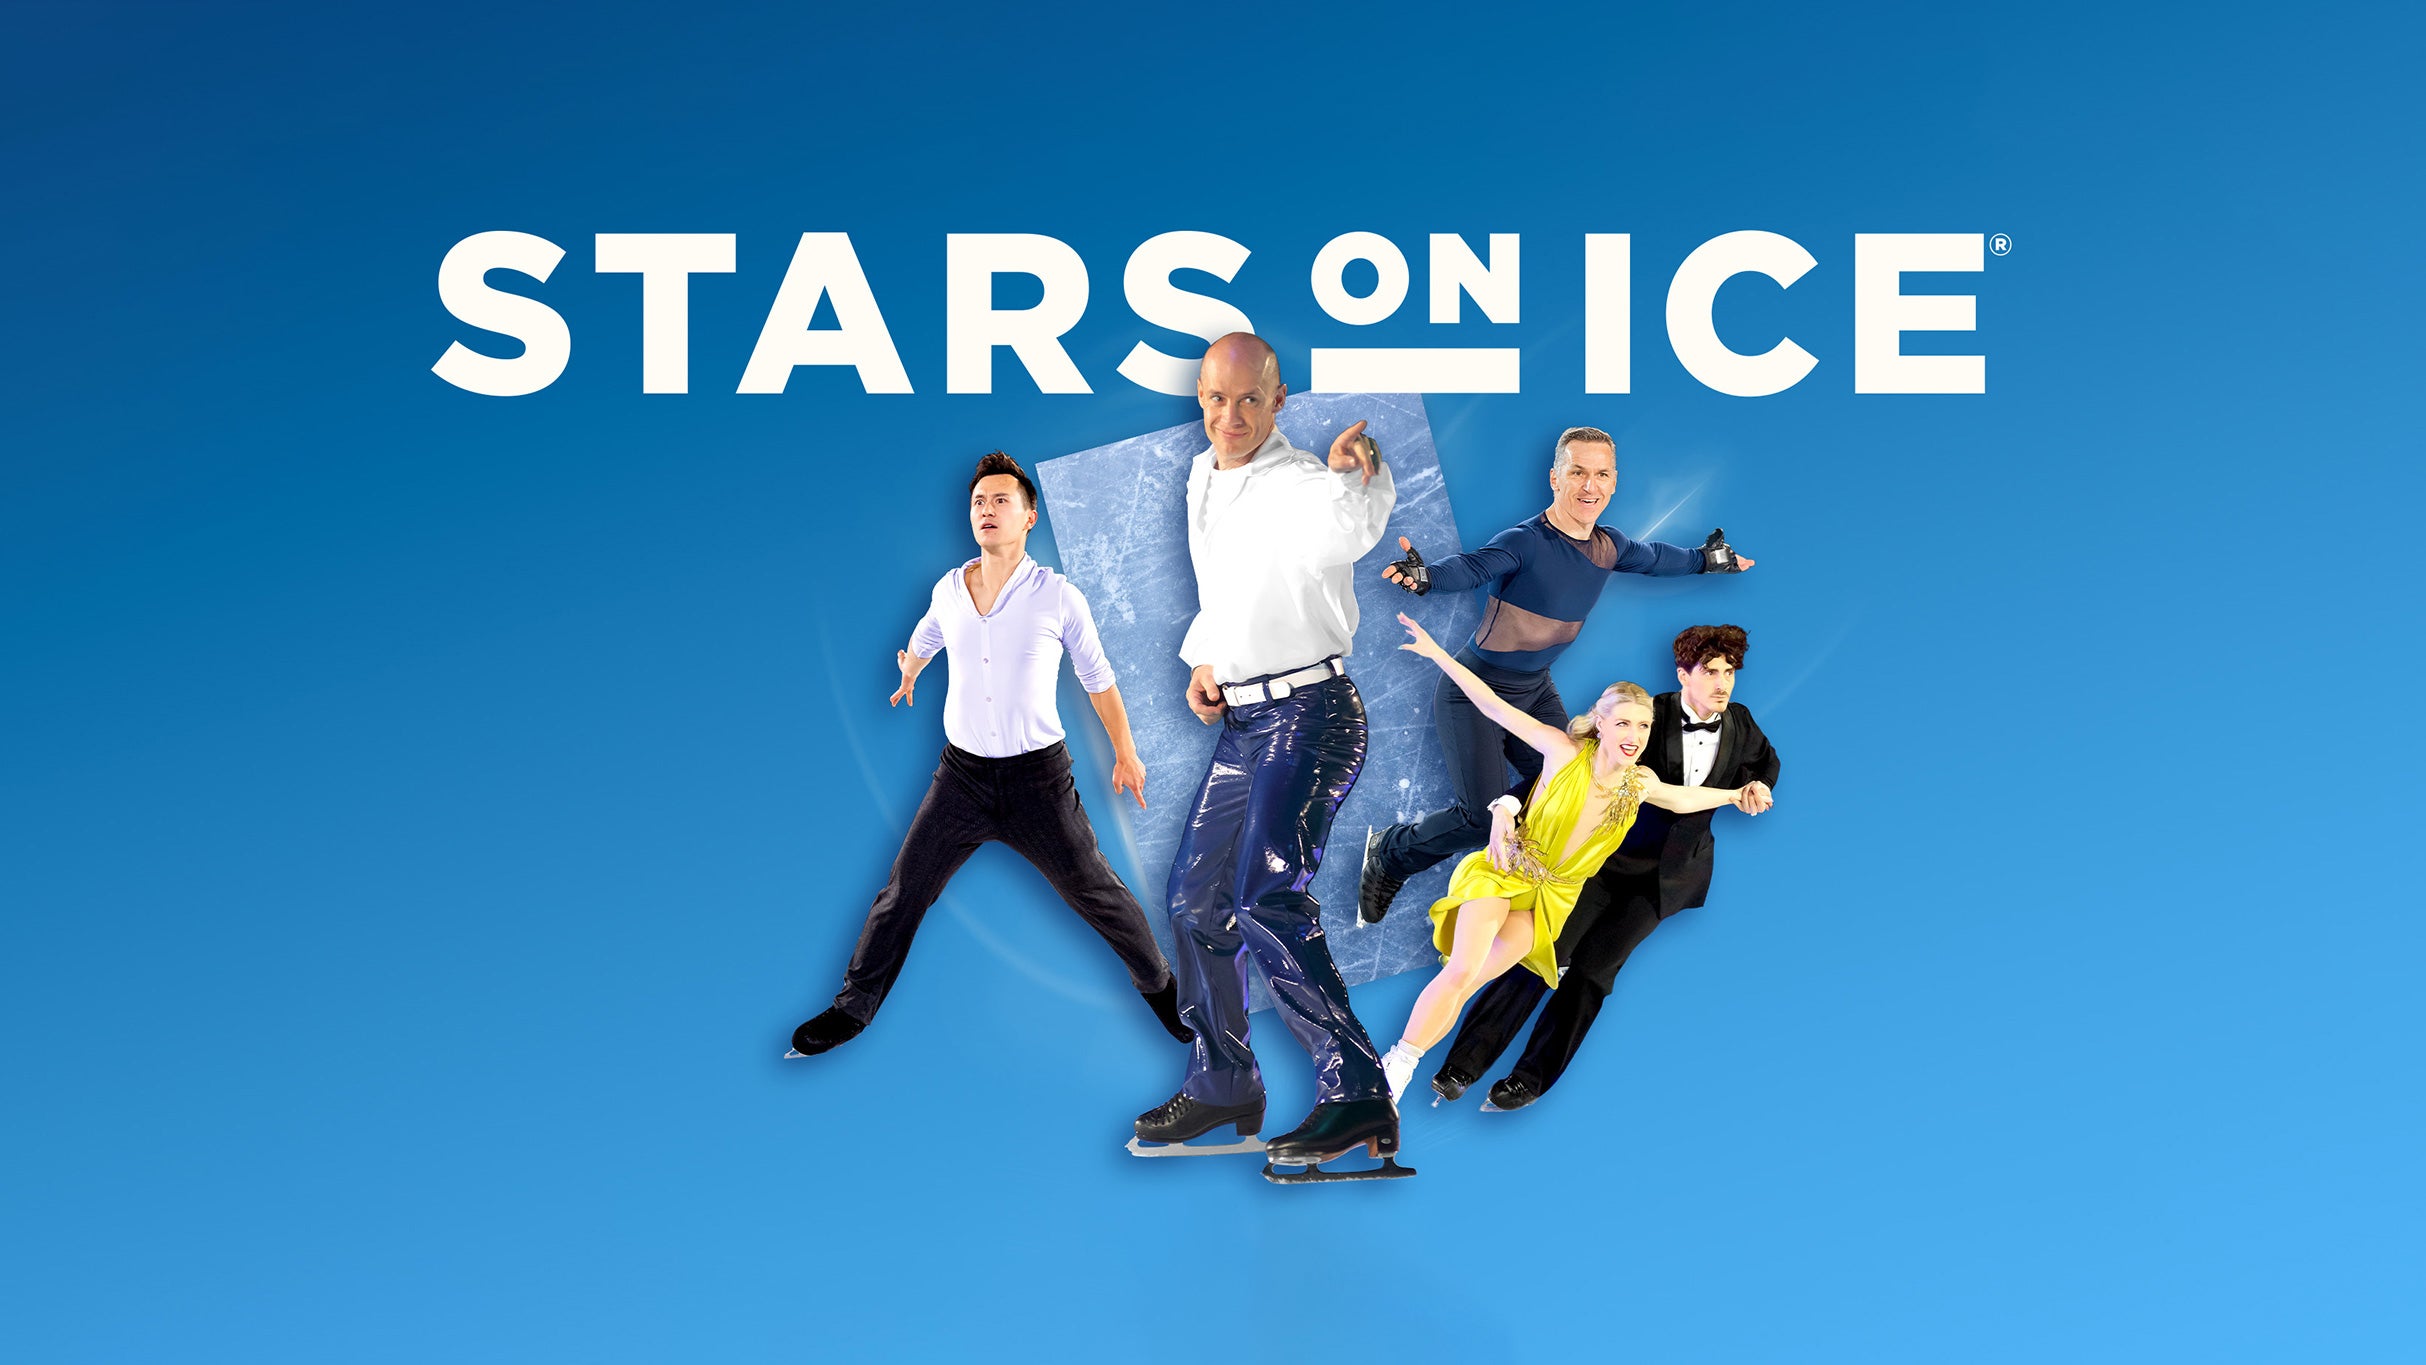 Stars on Ice - Canada in Saskatoon promo photo for Presales presale offer code